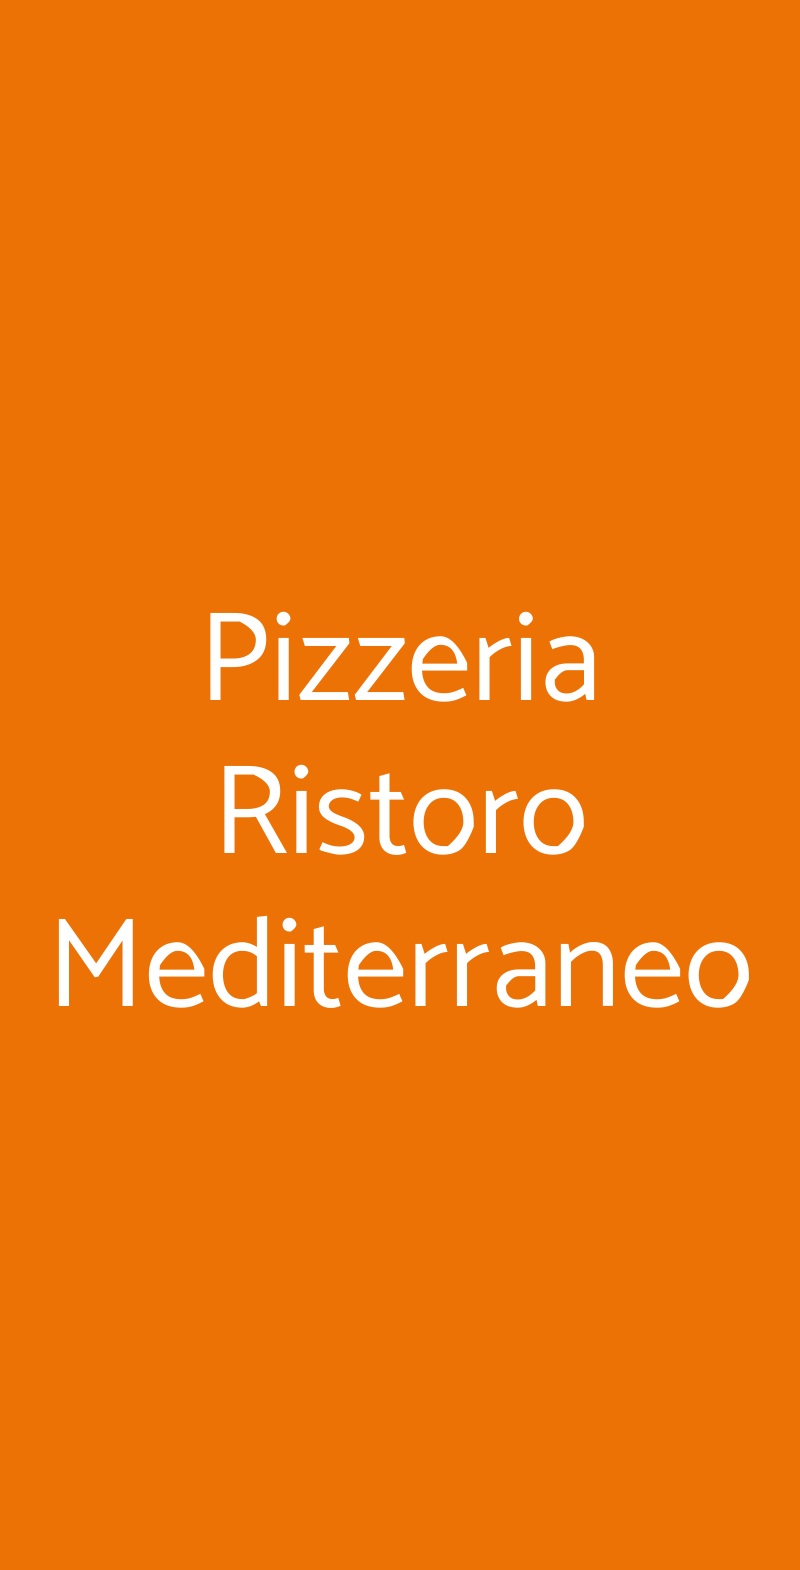 Pizzeria Ristoro Mediterraneo Bologna menù 1 pagina